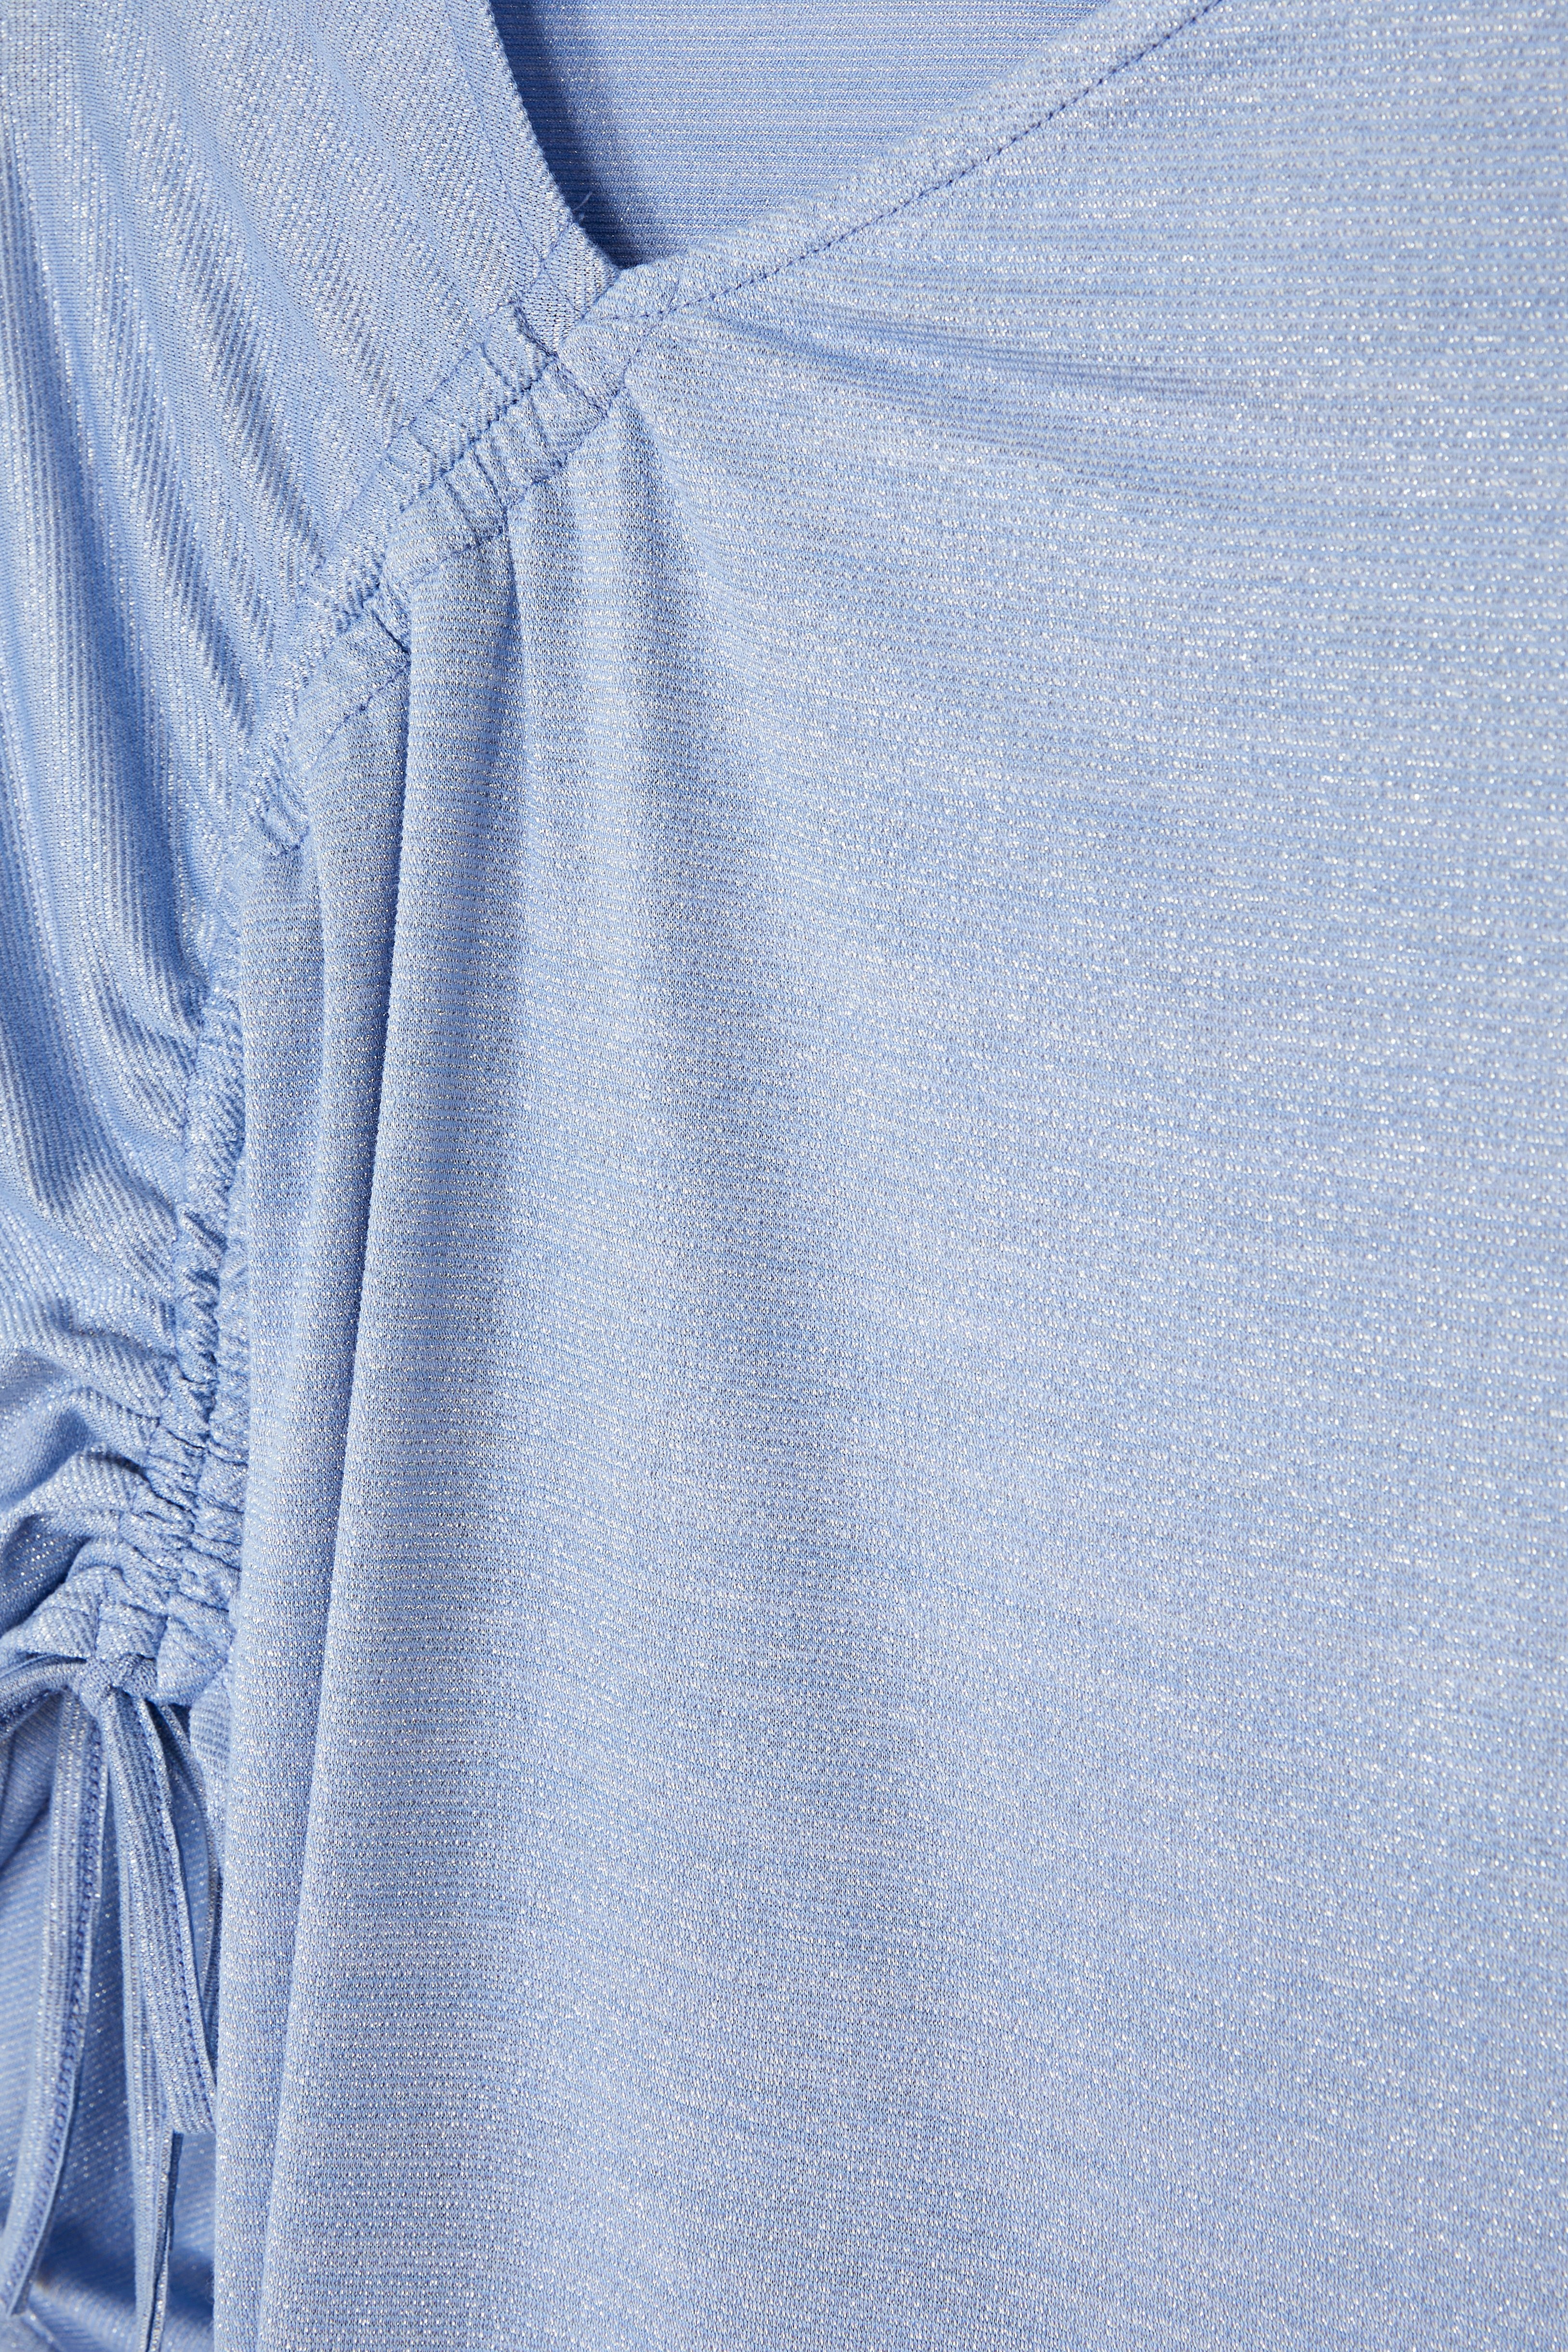 CKS Dames - INSTA - t-shirt korte mouwen - blauw